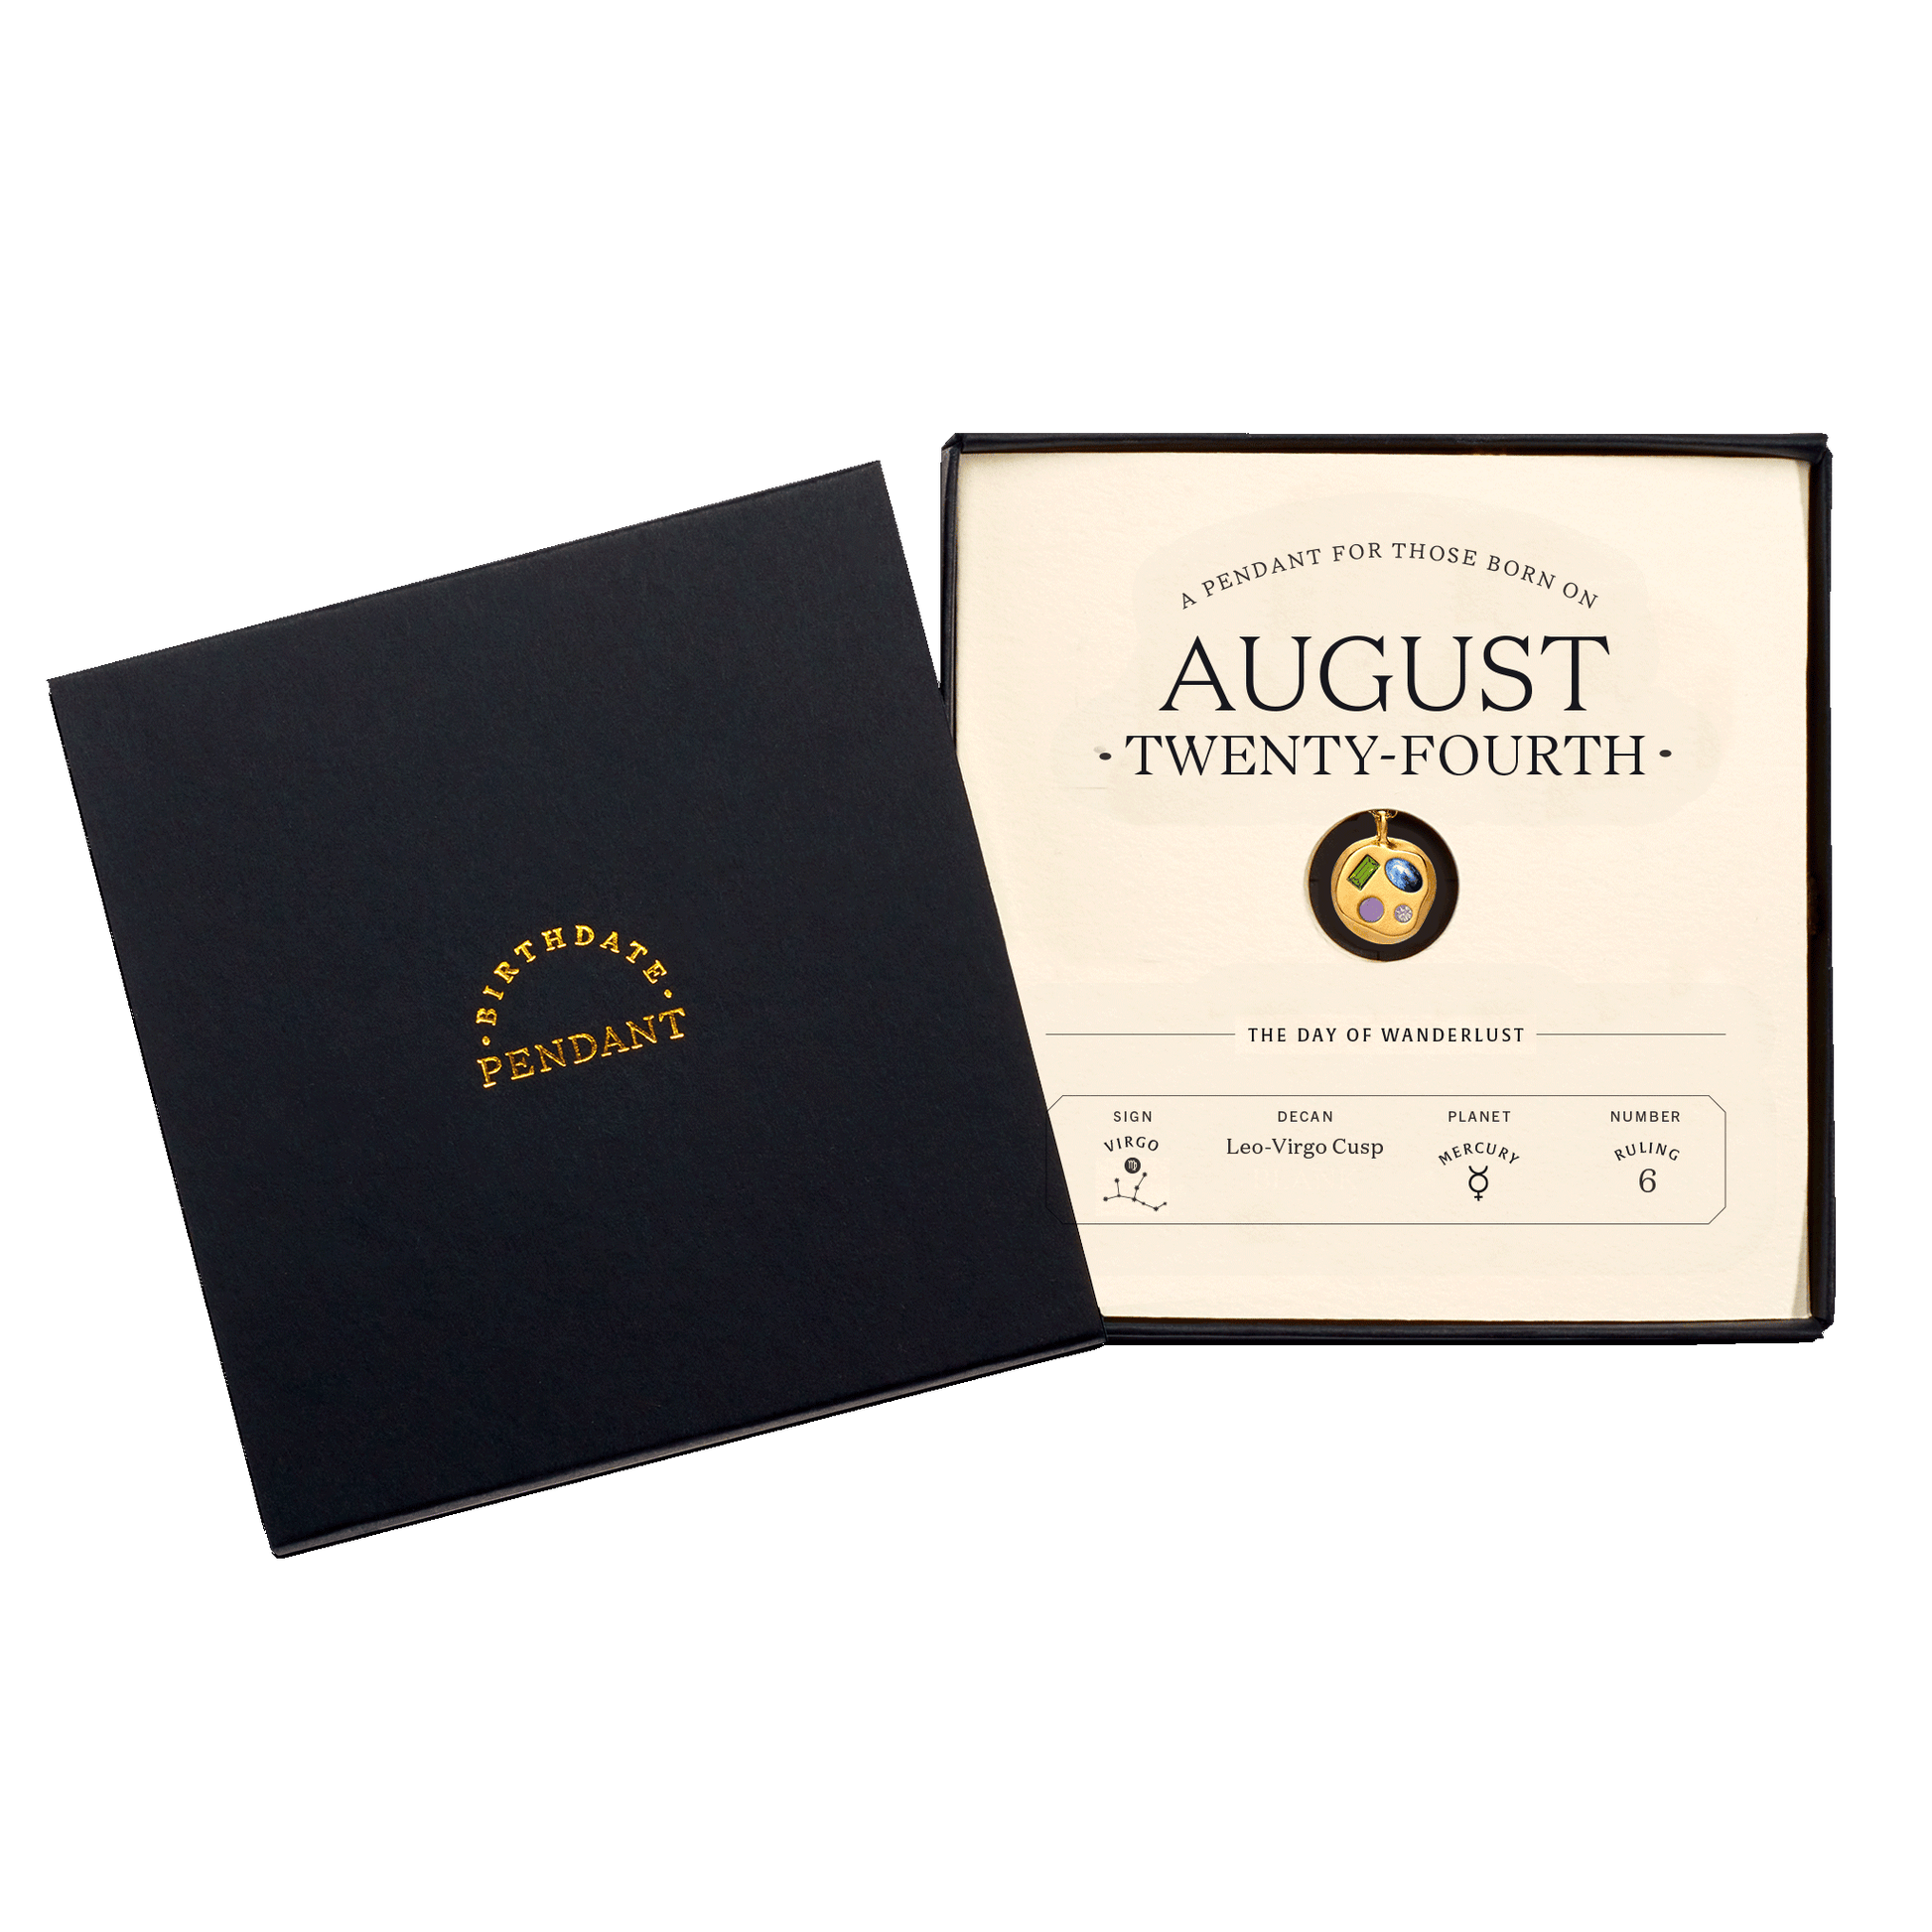 The August Twenty-Fourth Pendant inside its box